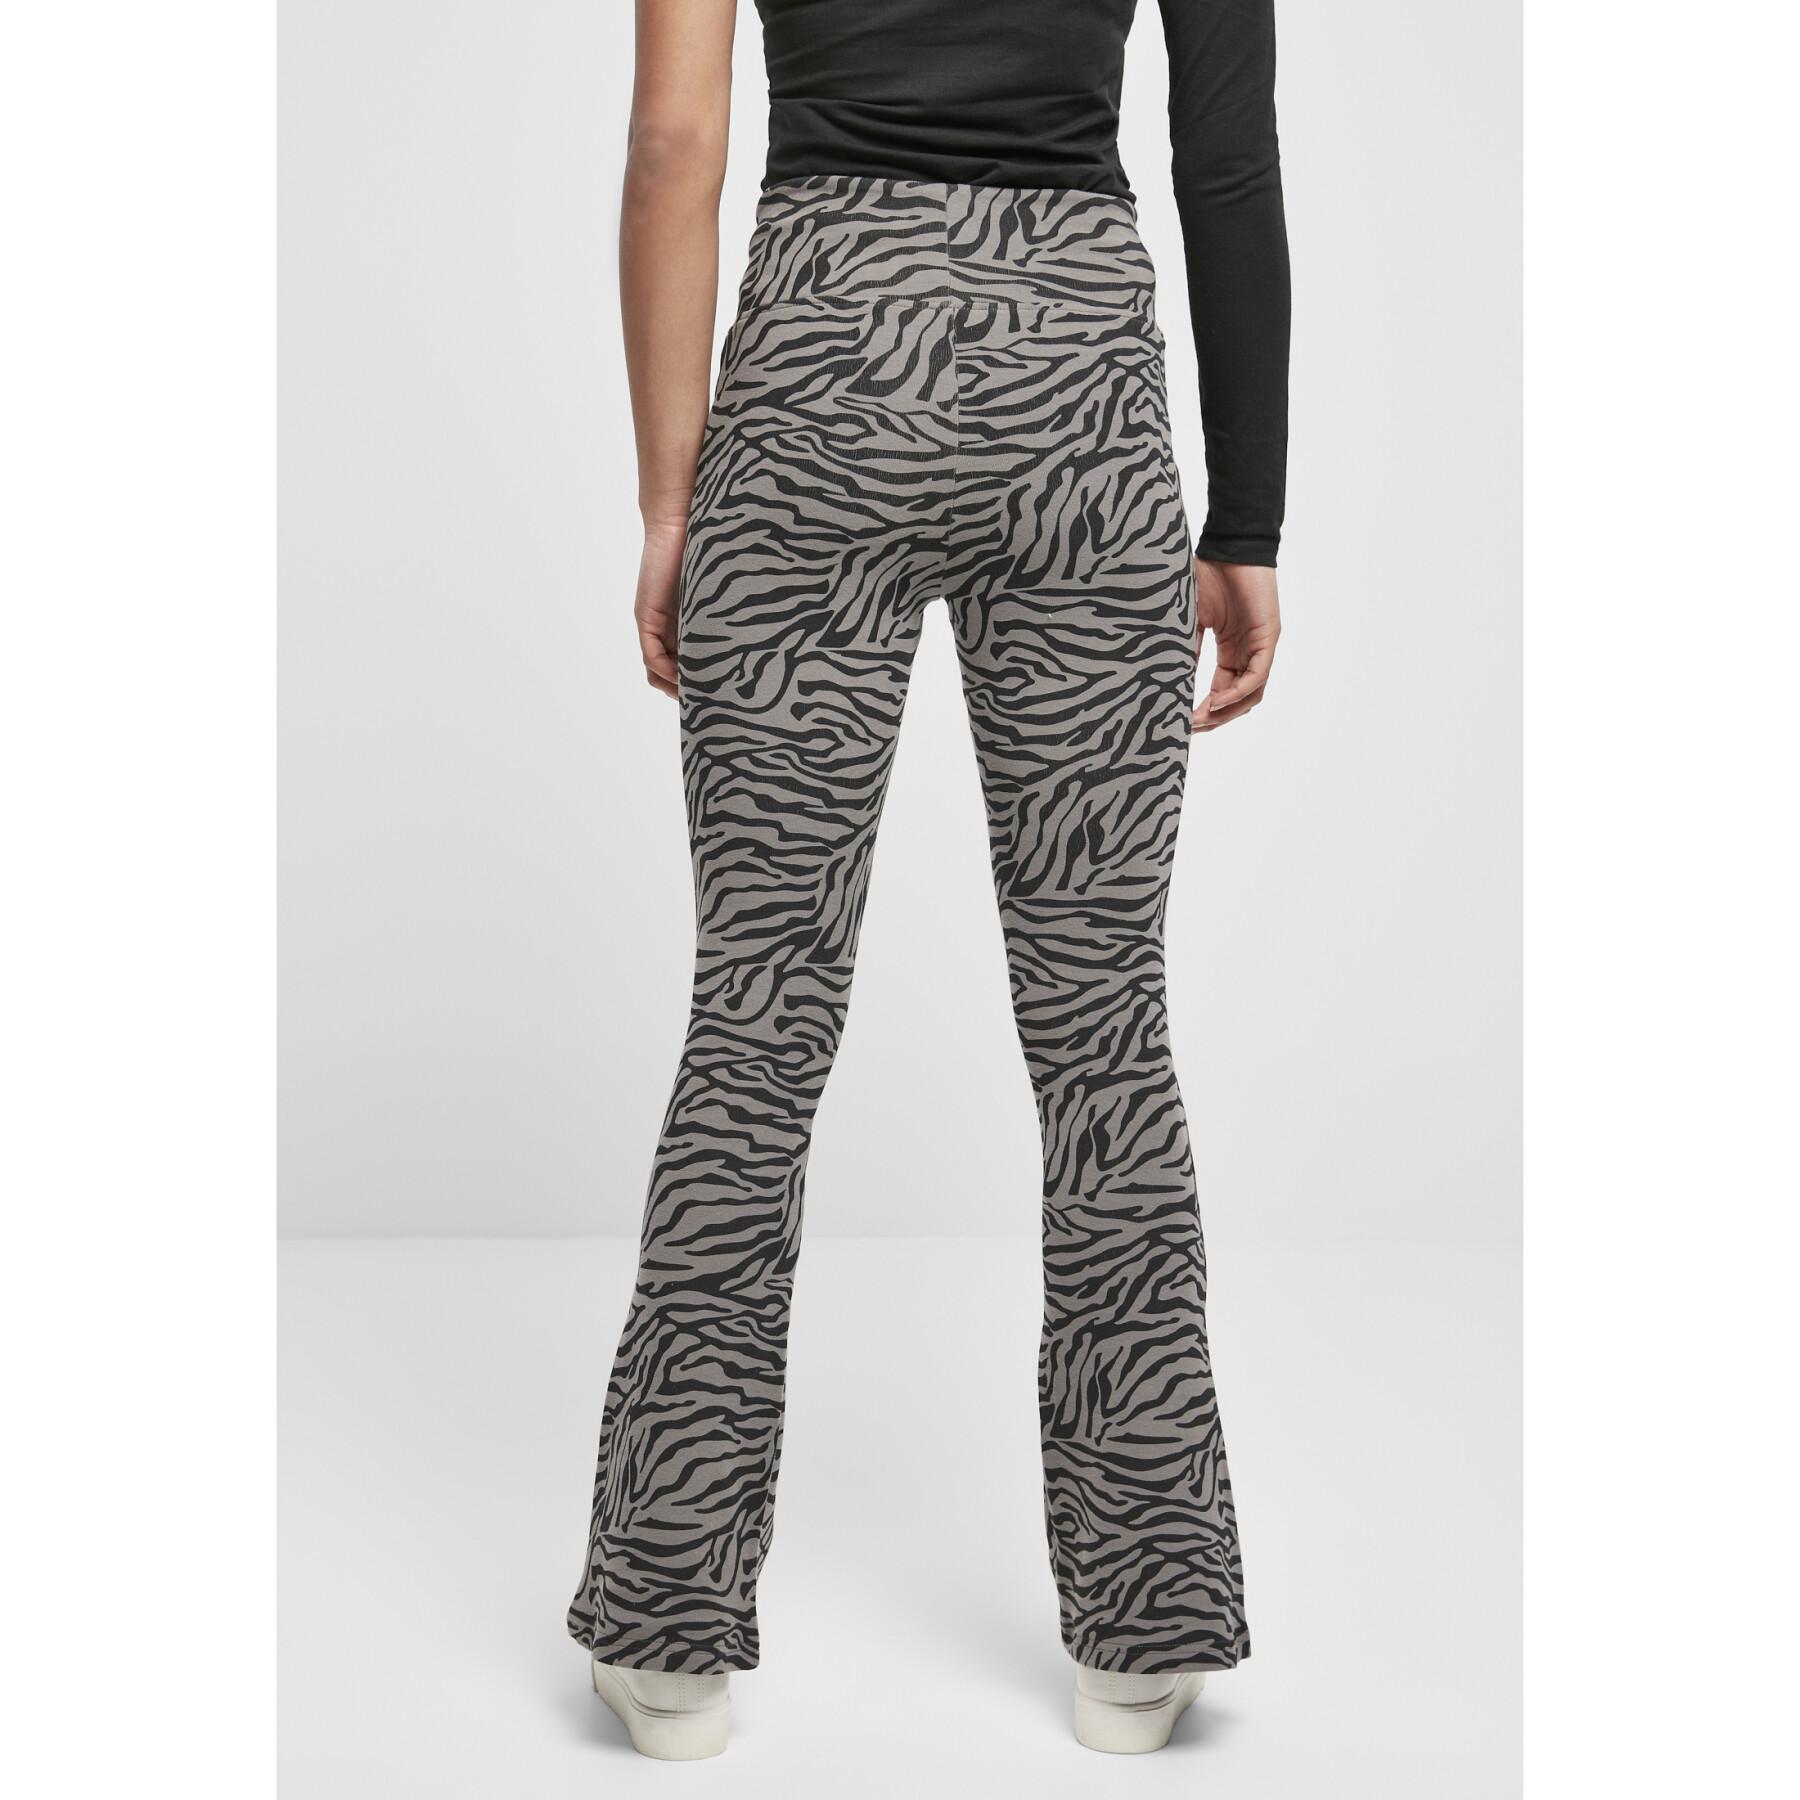 Women's high-waisted leggings Urban Classics zebra boot